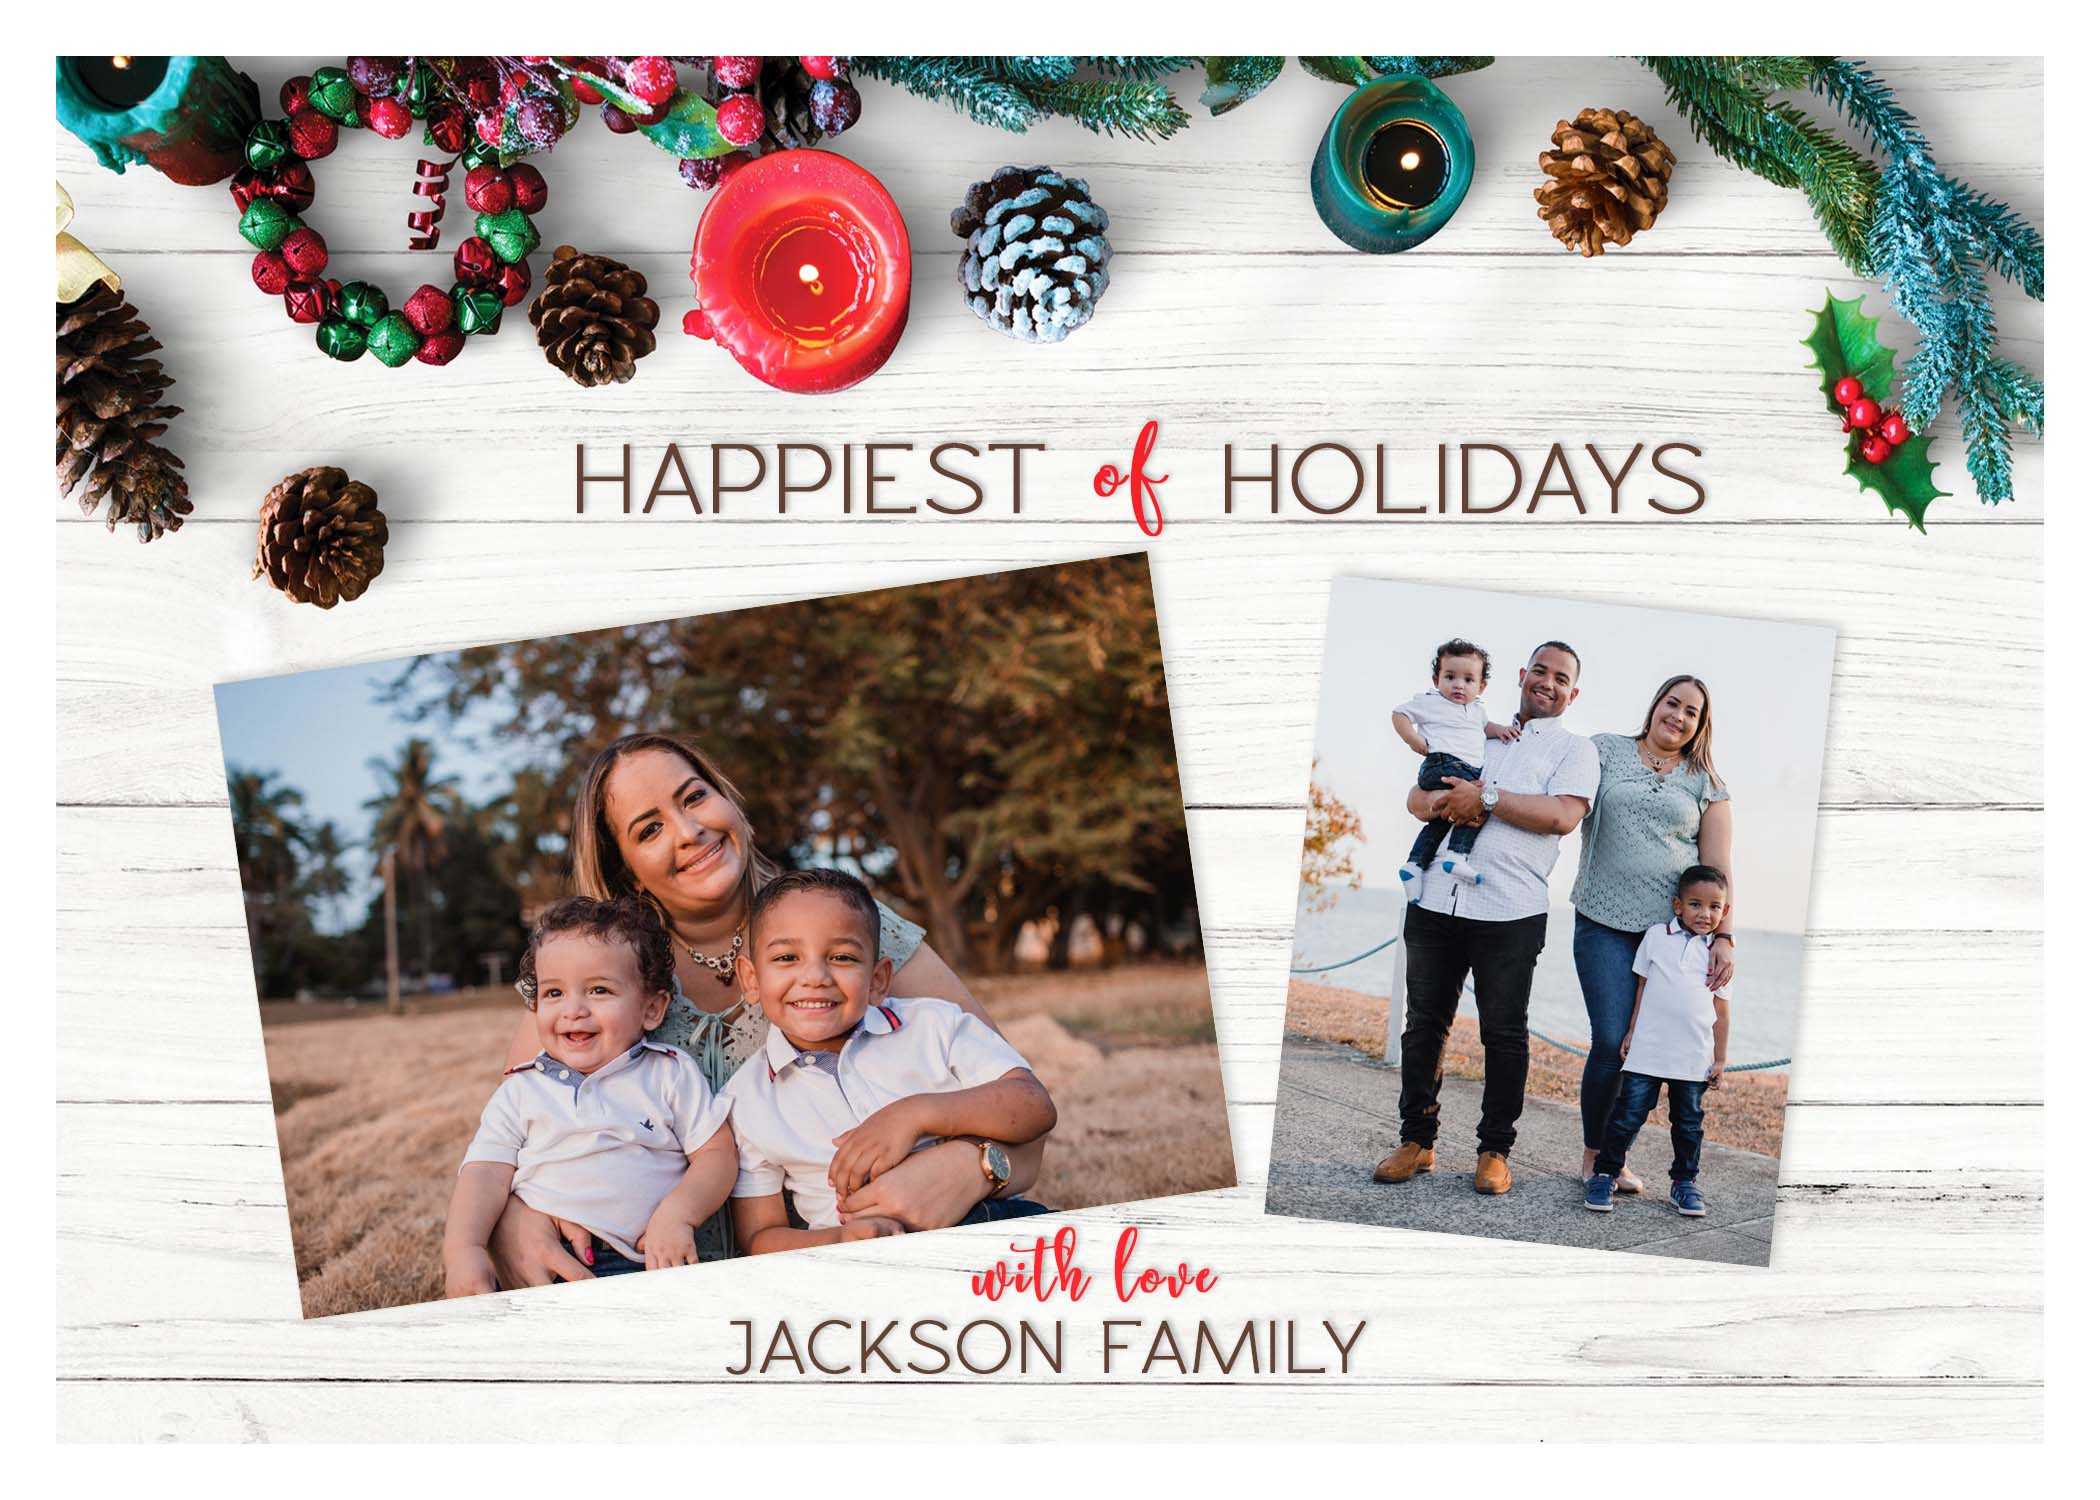 Holiday Greeting Card 1 | Dioskouri Designs Regarding Free Christmas Card Templates For Photographers